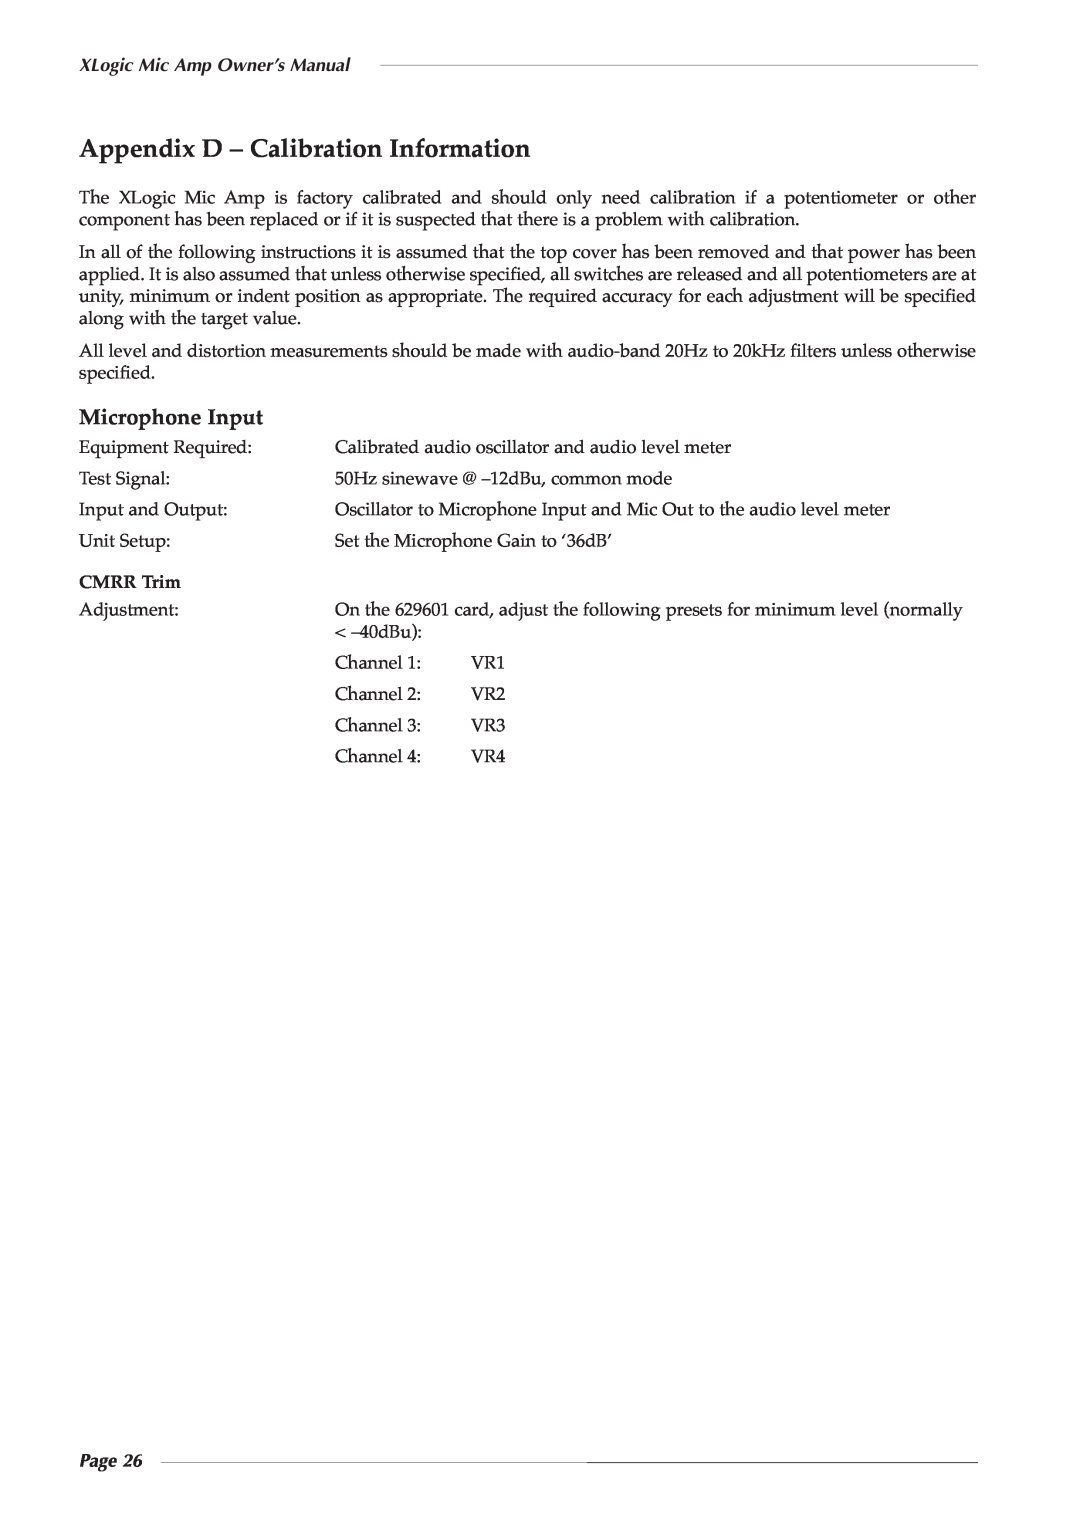 Solid State Logic 82S6XL020E owner manual Appendix D - Calibration Information, Microphone Input, CMRR Trim, Page 